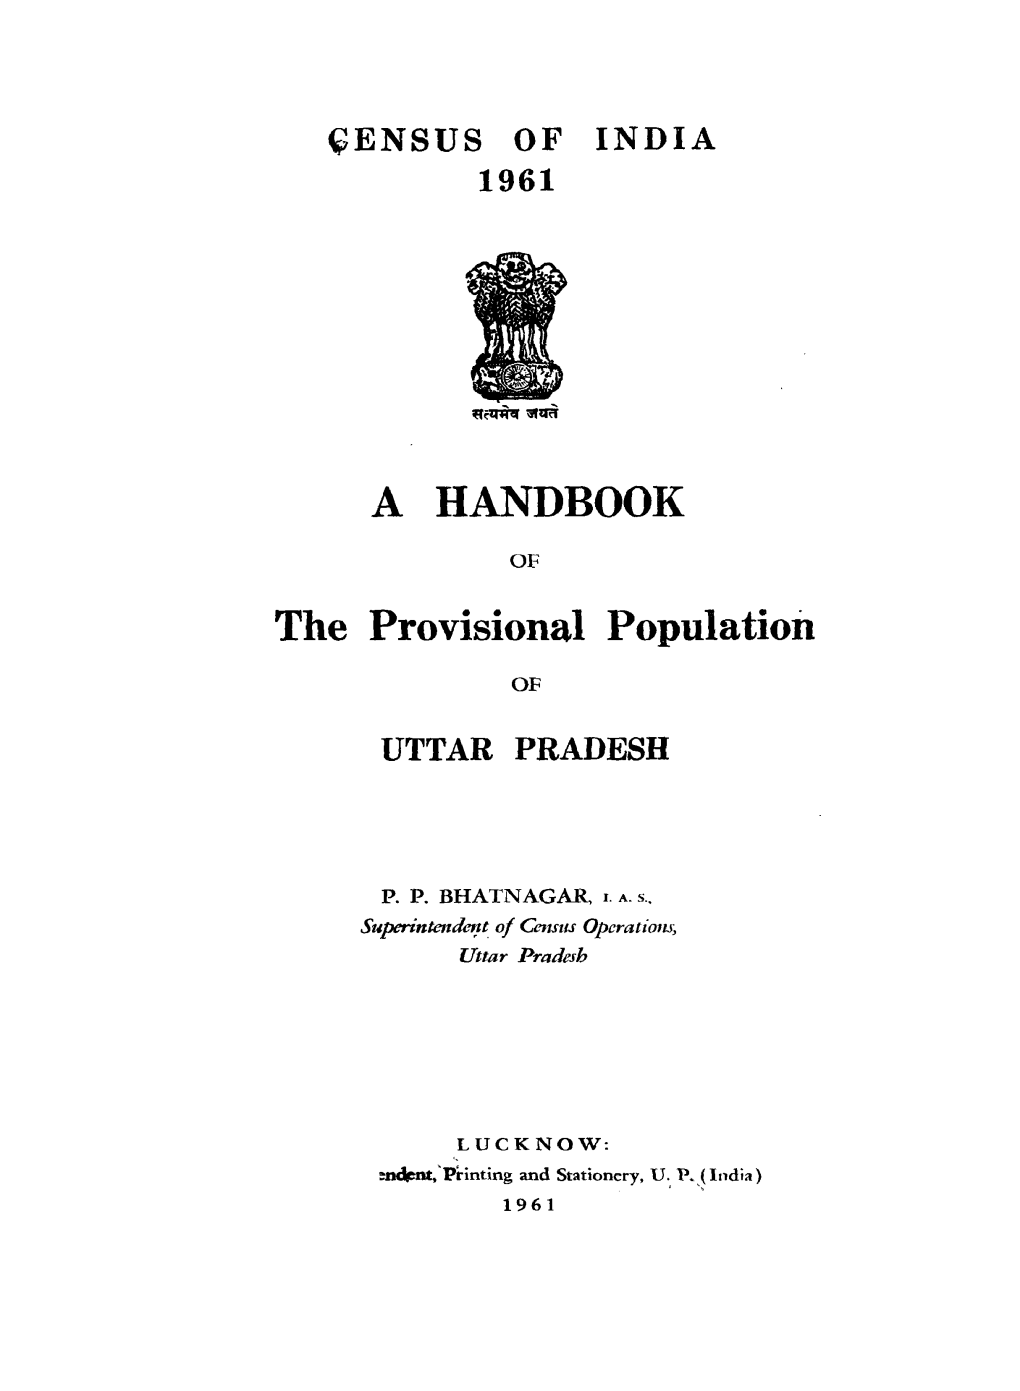 Handbook of the Provisional Population, Uttar Pradesh